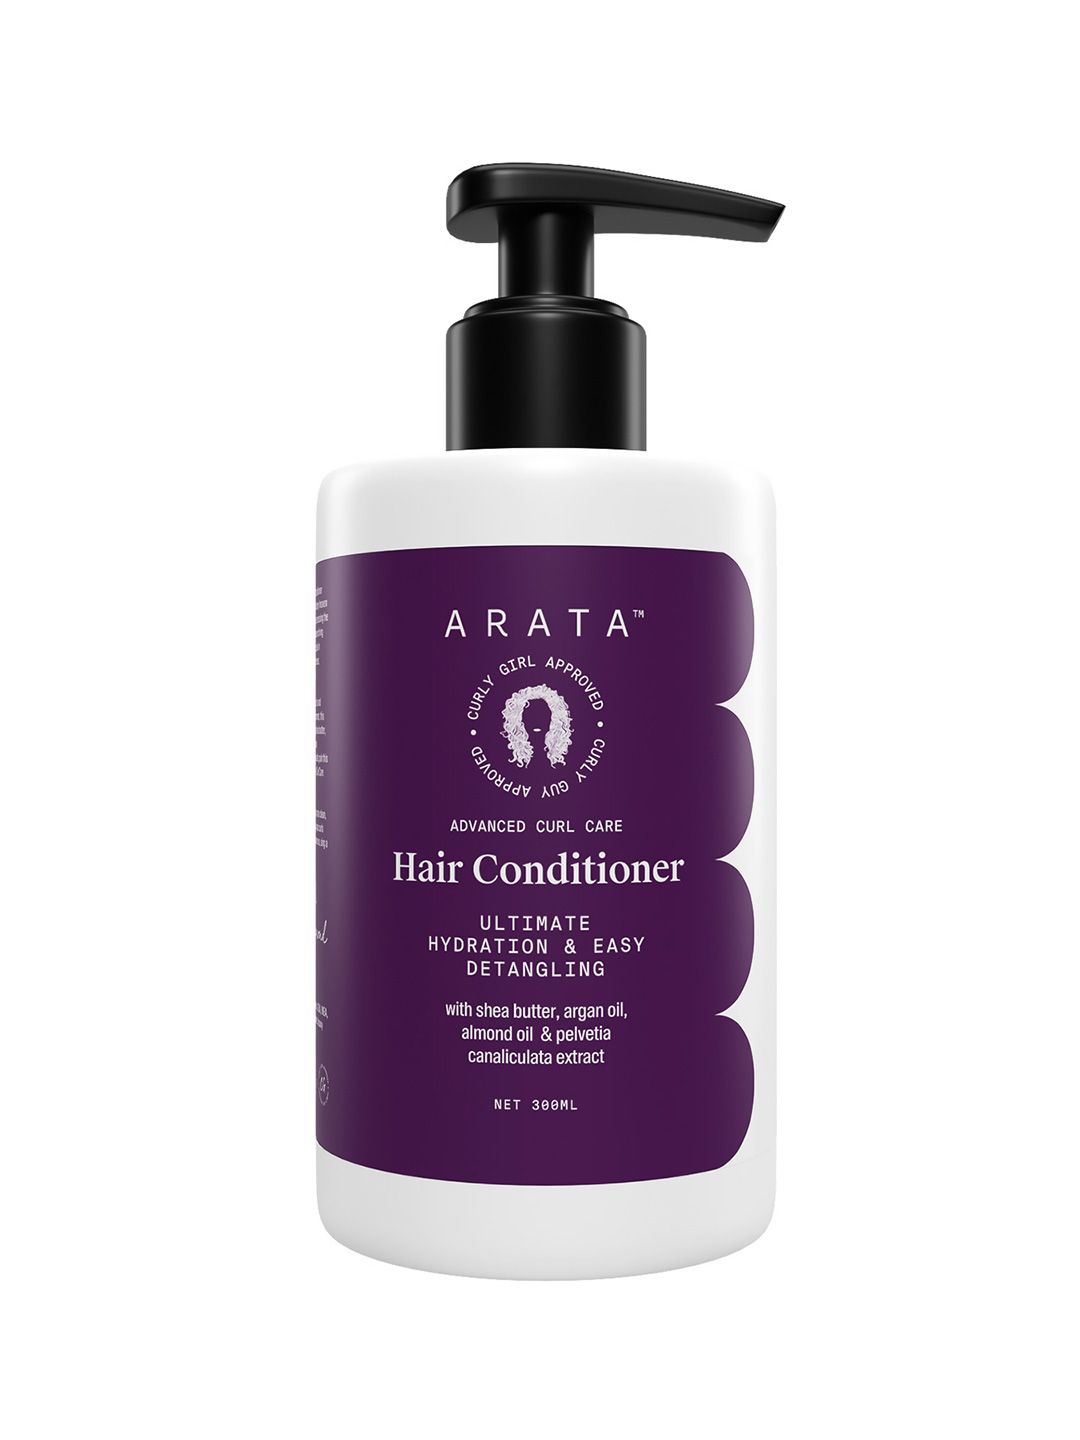 ARATA Advanced Curl Care Hair Conditioner - 300 ml Price in India